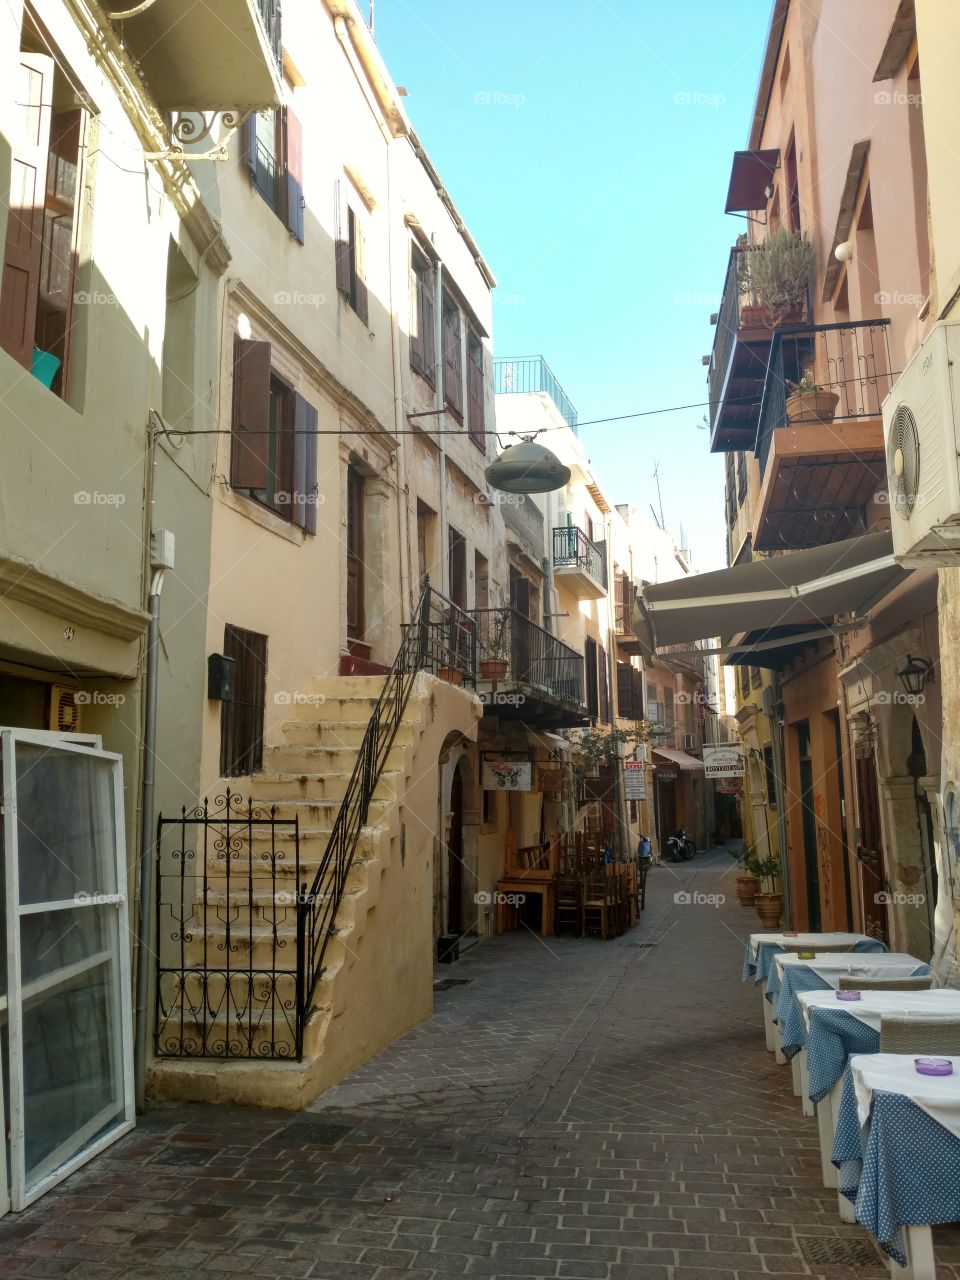 Street Alley in Crete